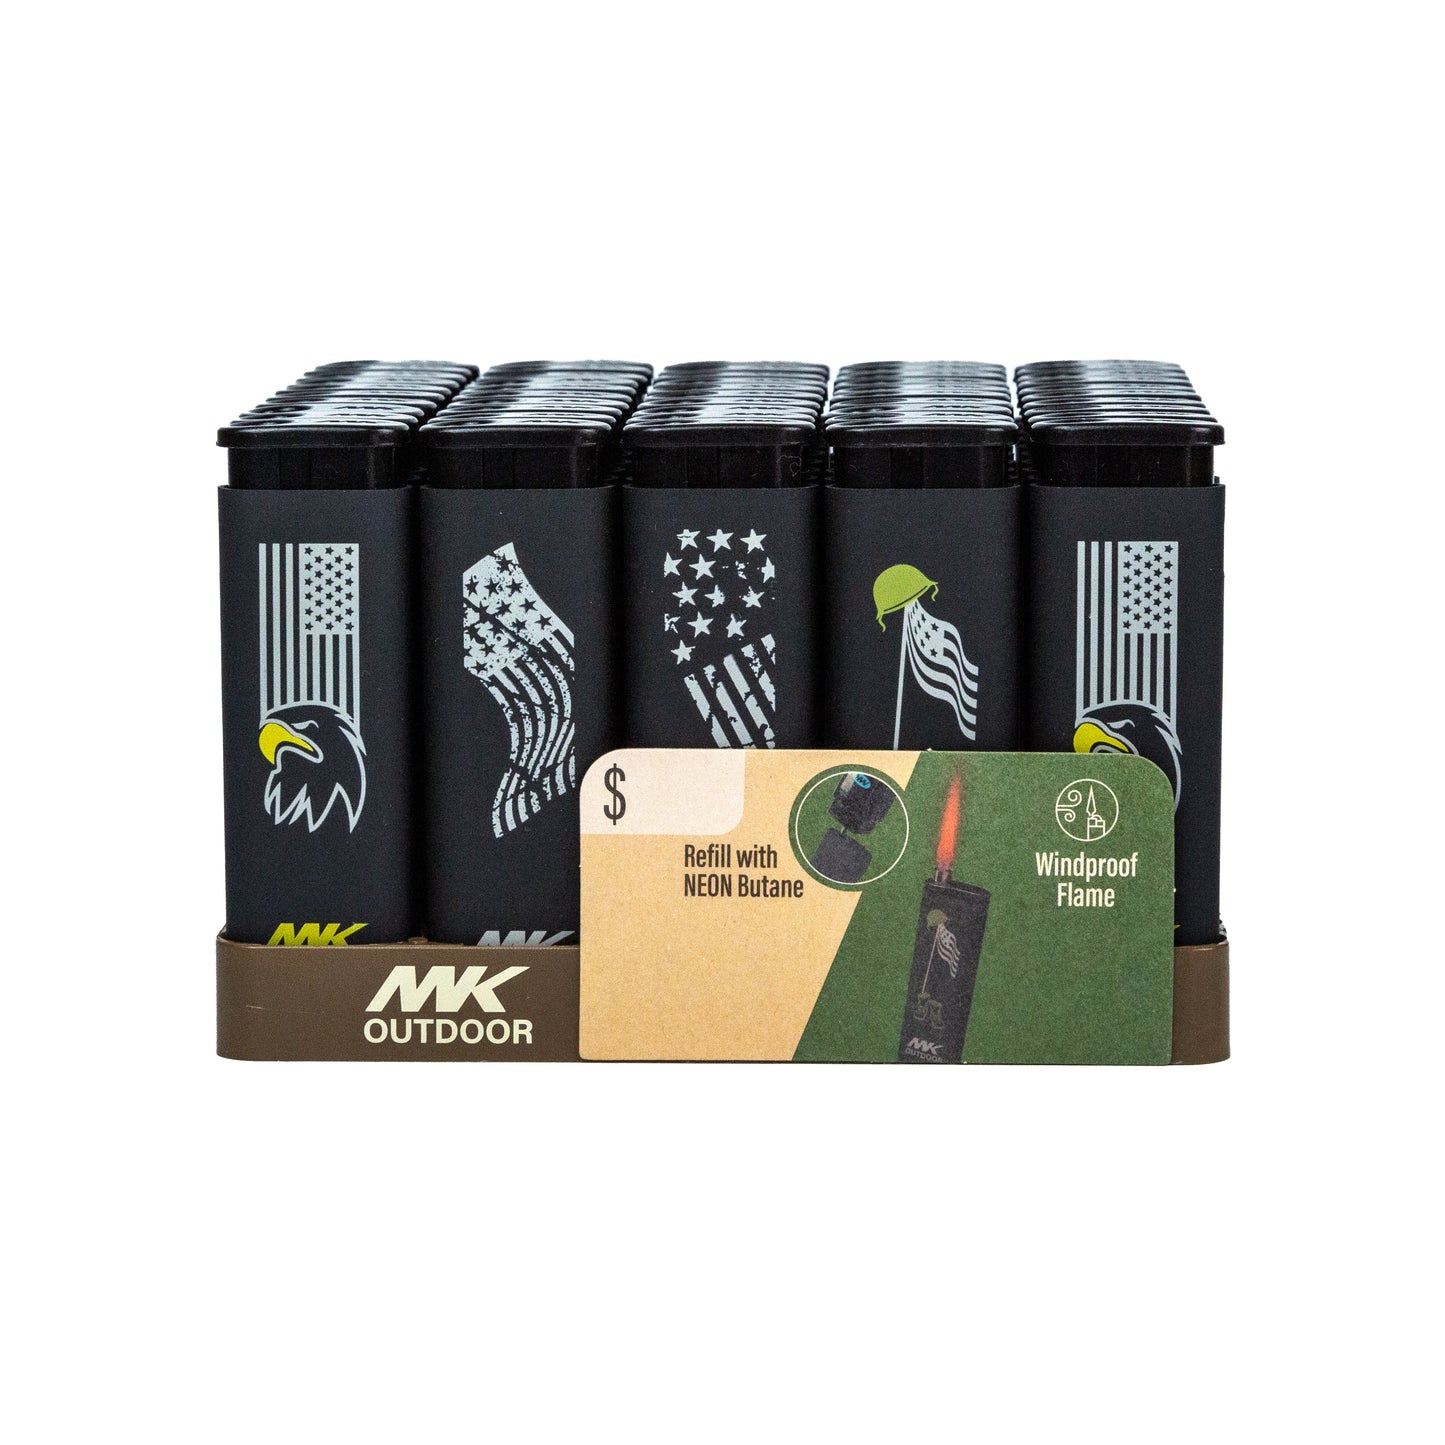 MK Lighter Outdoor Series, Alpine Set, Windproof Flame, Pocket Lighters (Freedom 50pcs)